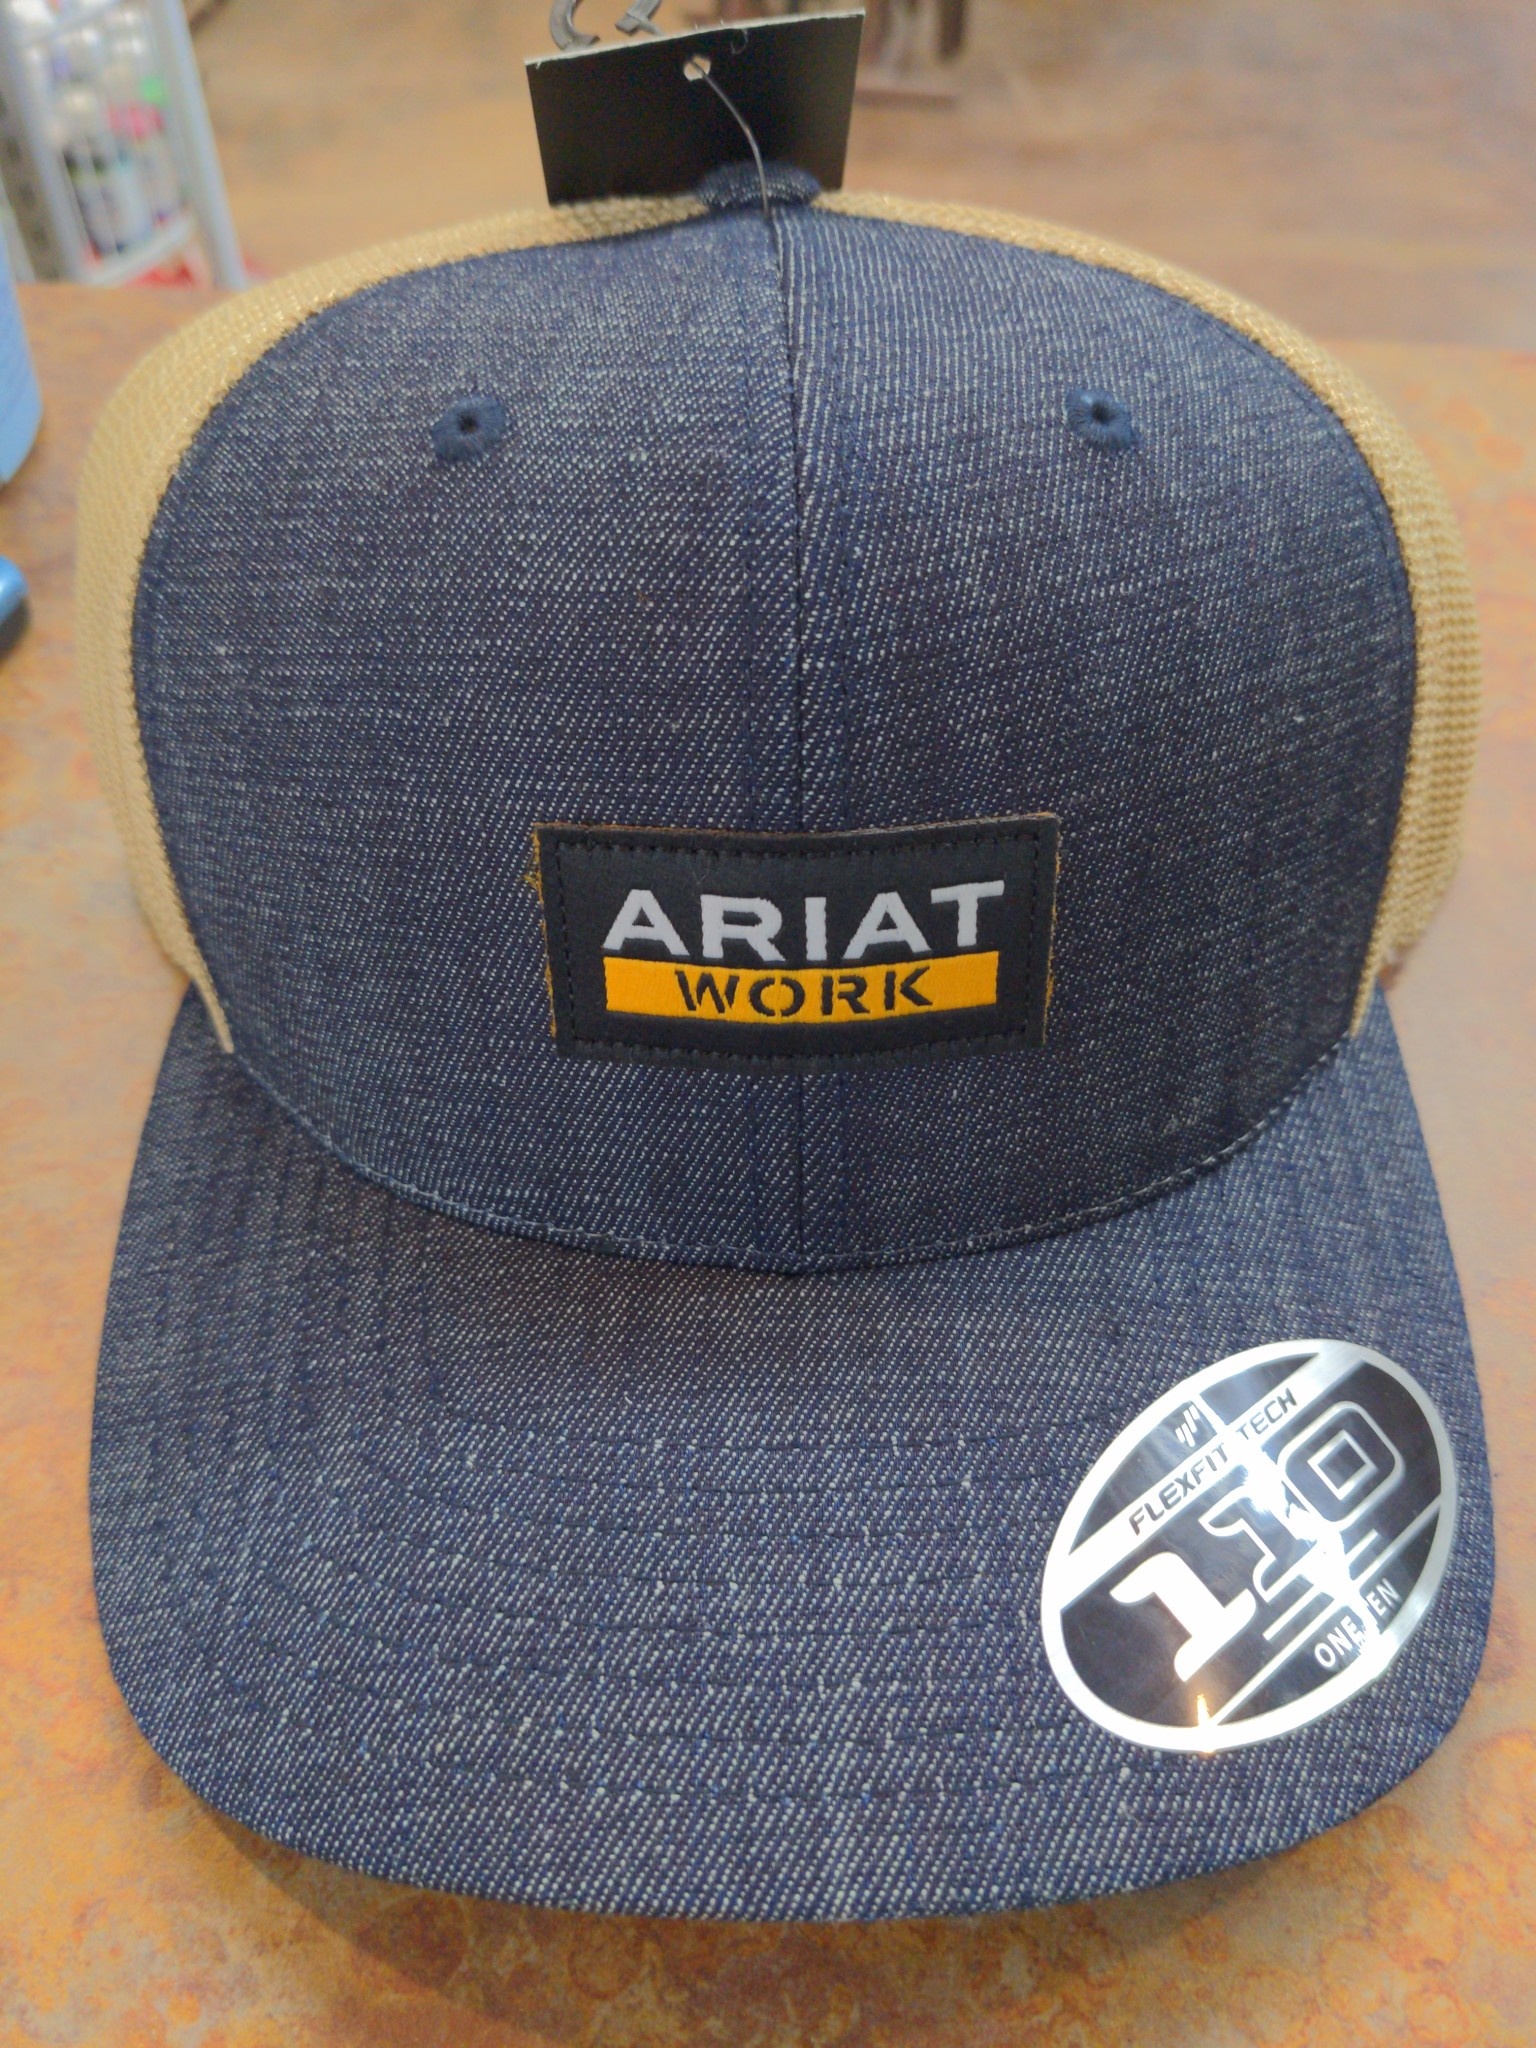 Ariat A300018620 Ariat work ballcap - A Bit of Tack